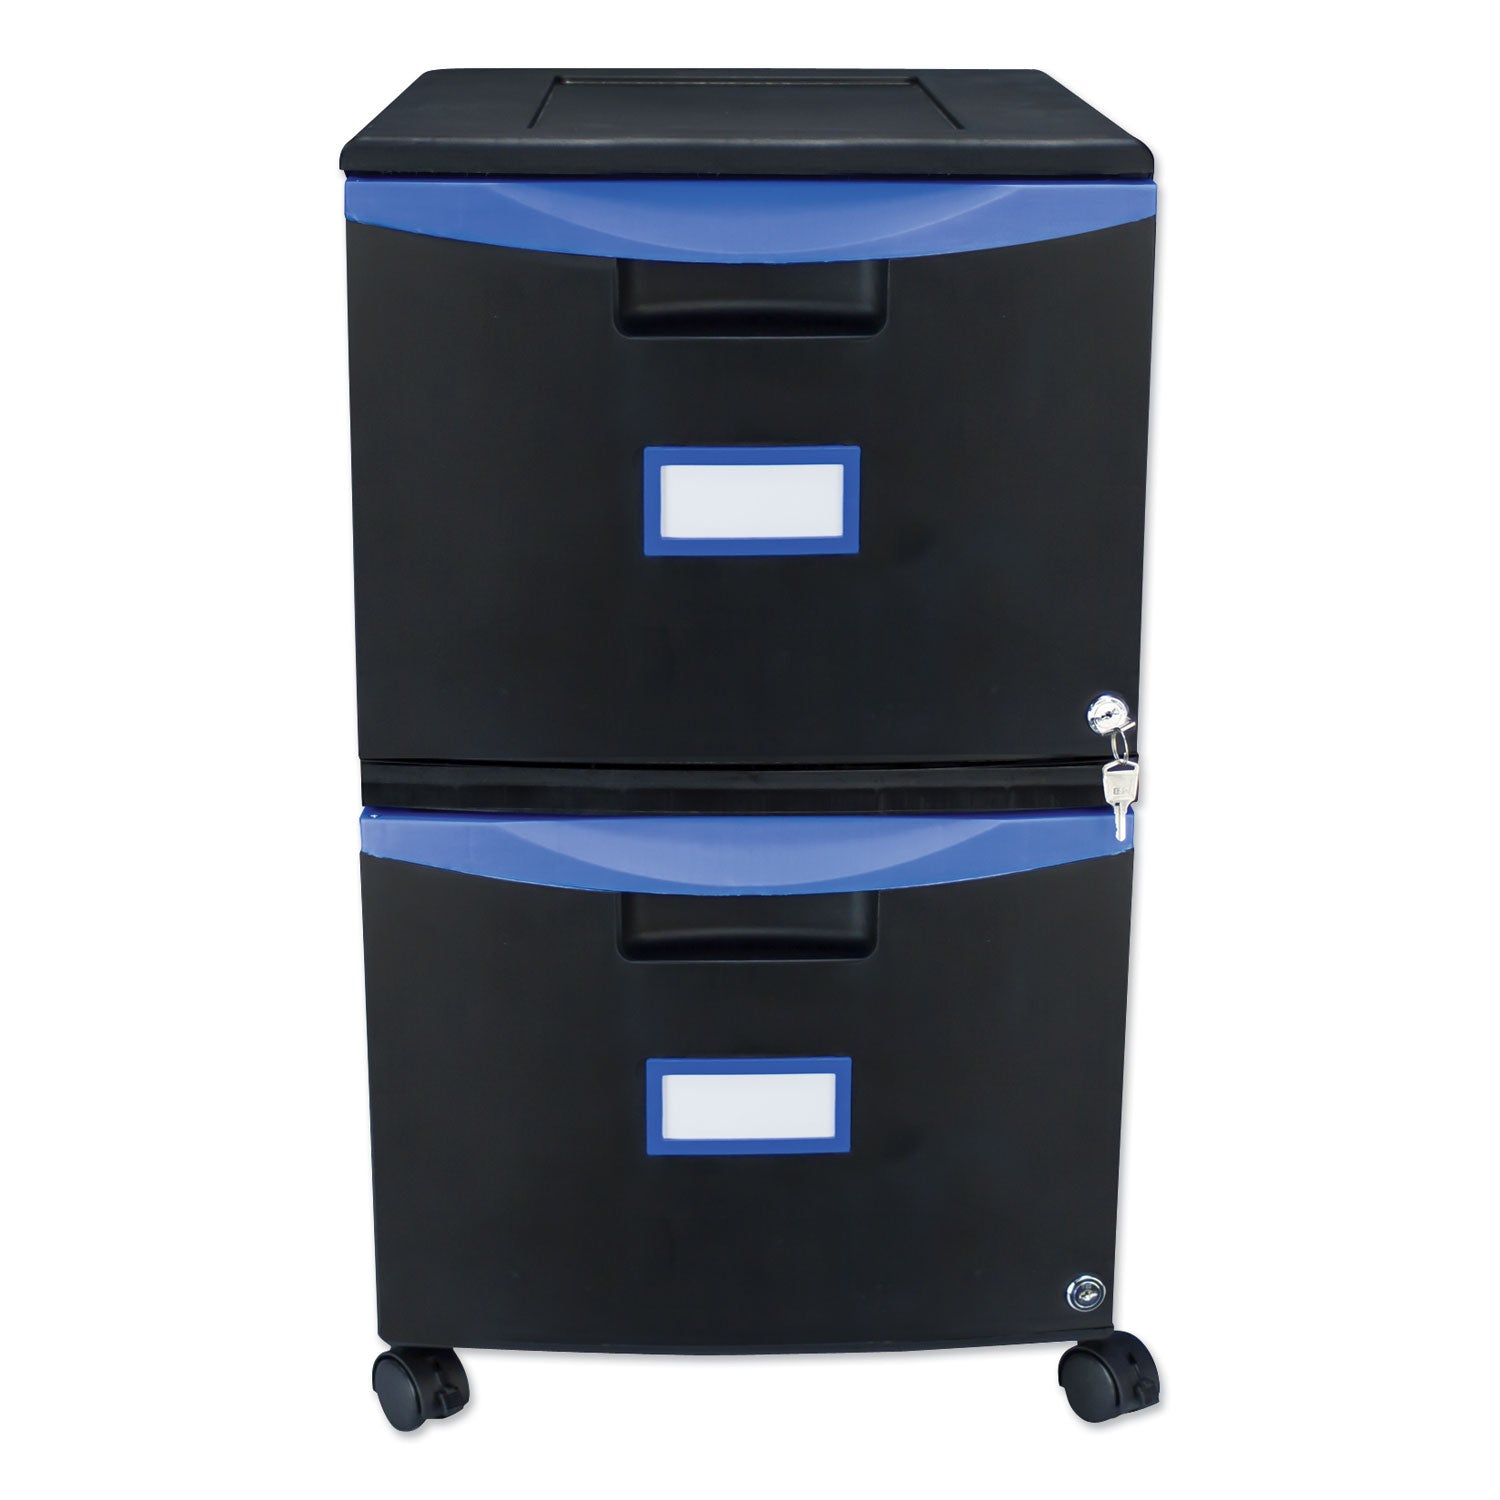 two-drawer-mobile-filing-cabinet-2-legal-letter-size-file-drawers-black-blue-1475-x-1825-x-26_stx61314u01c - 1